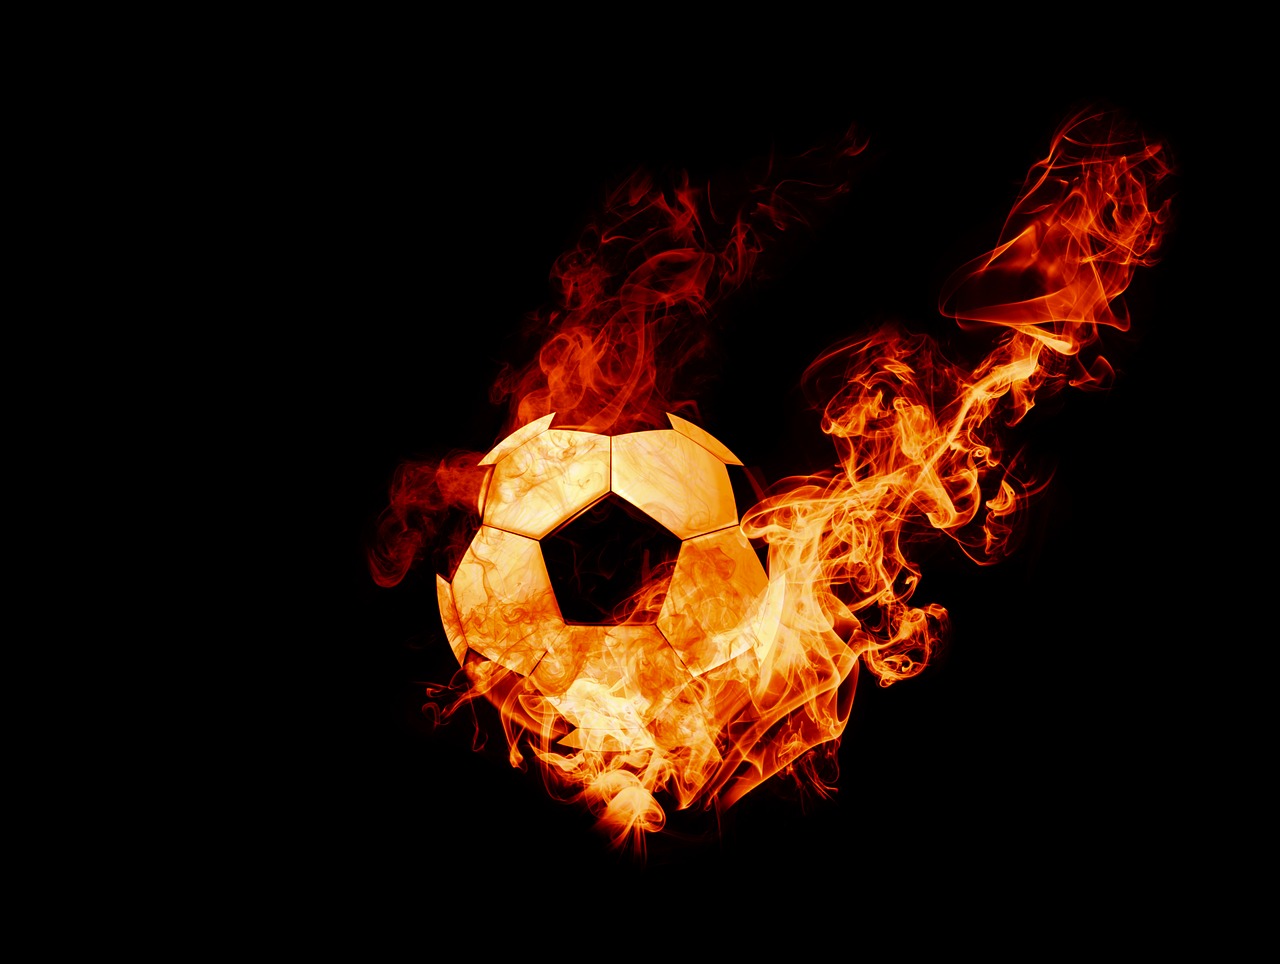 brennender Fußball